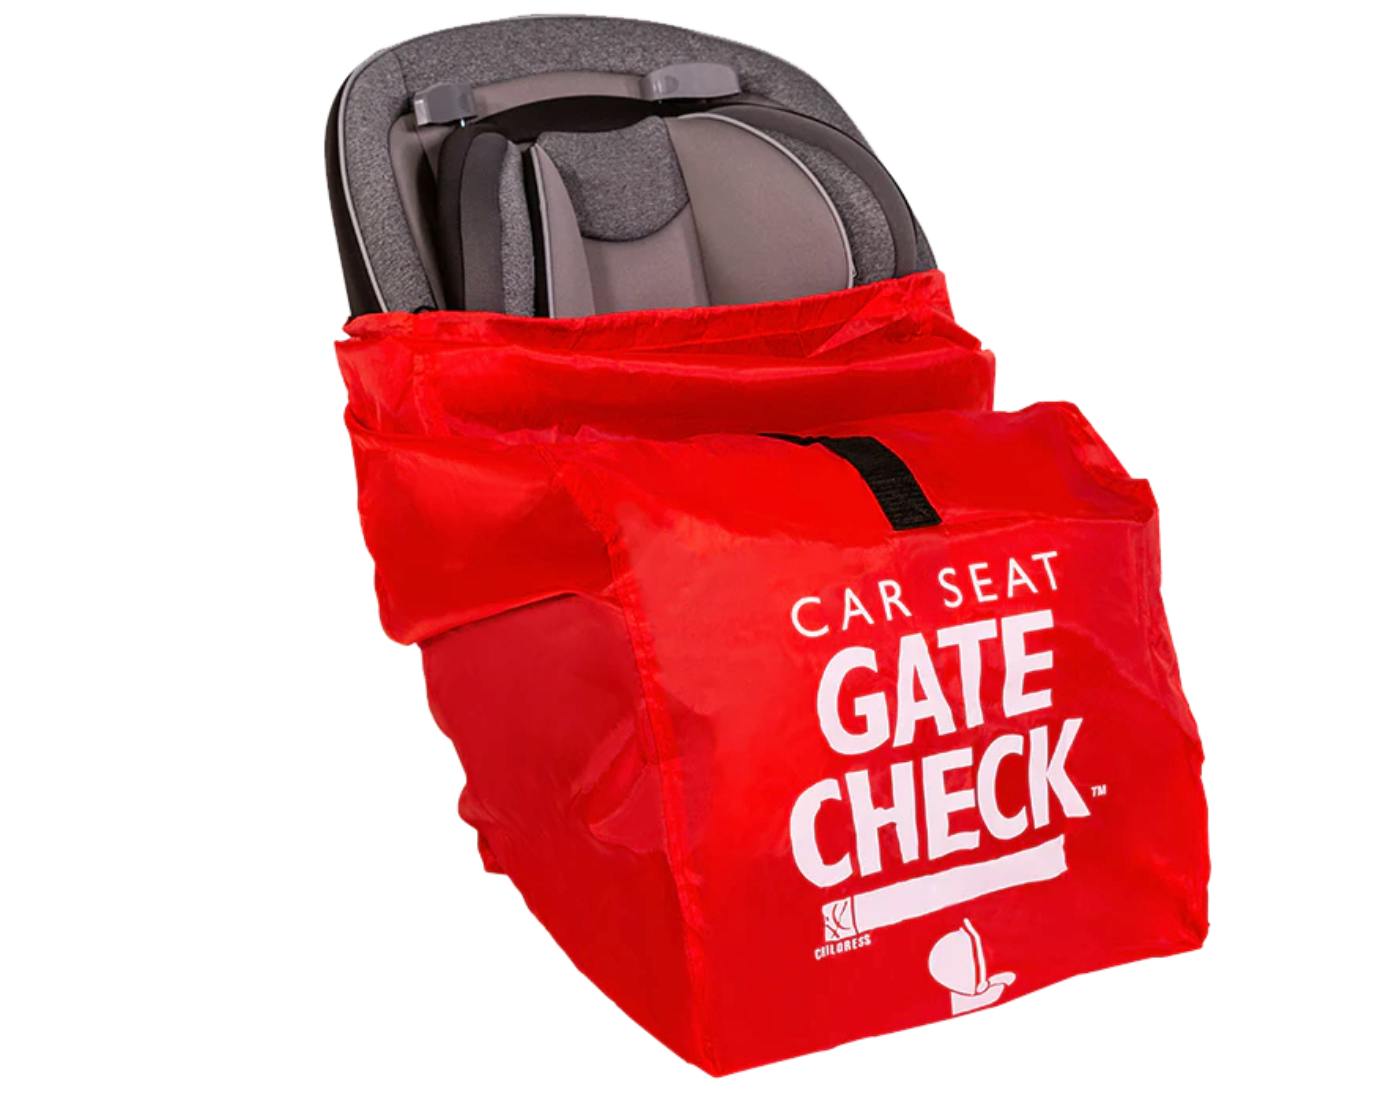 The J.L. Childress Gate Check Bag.